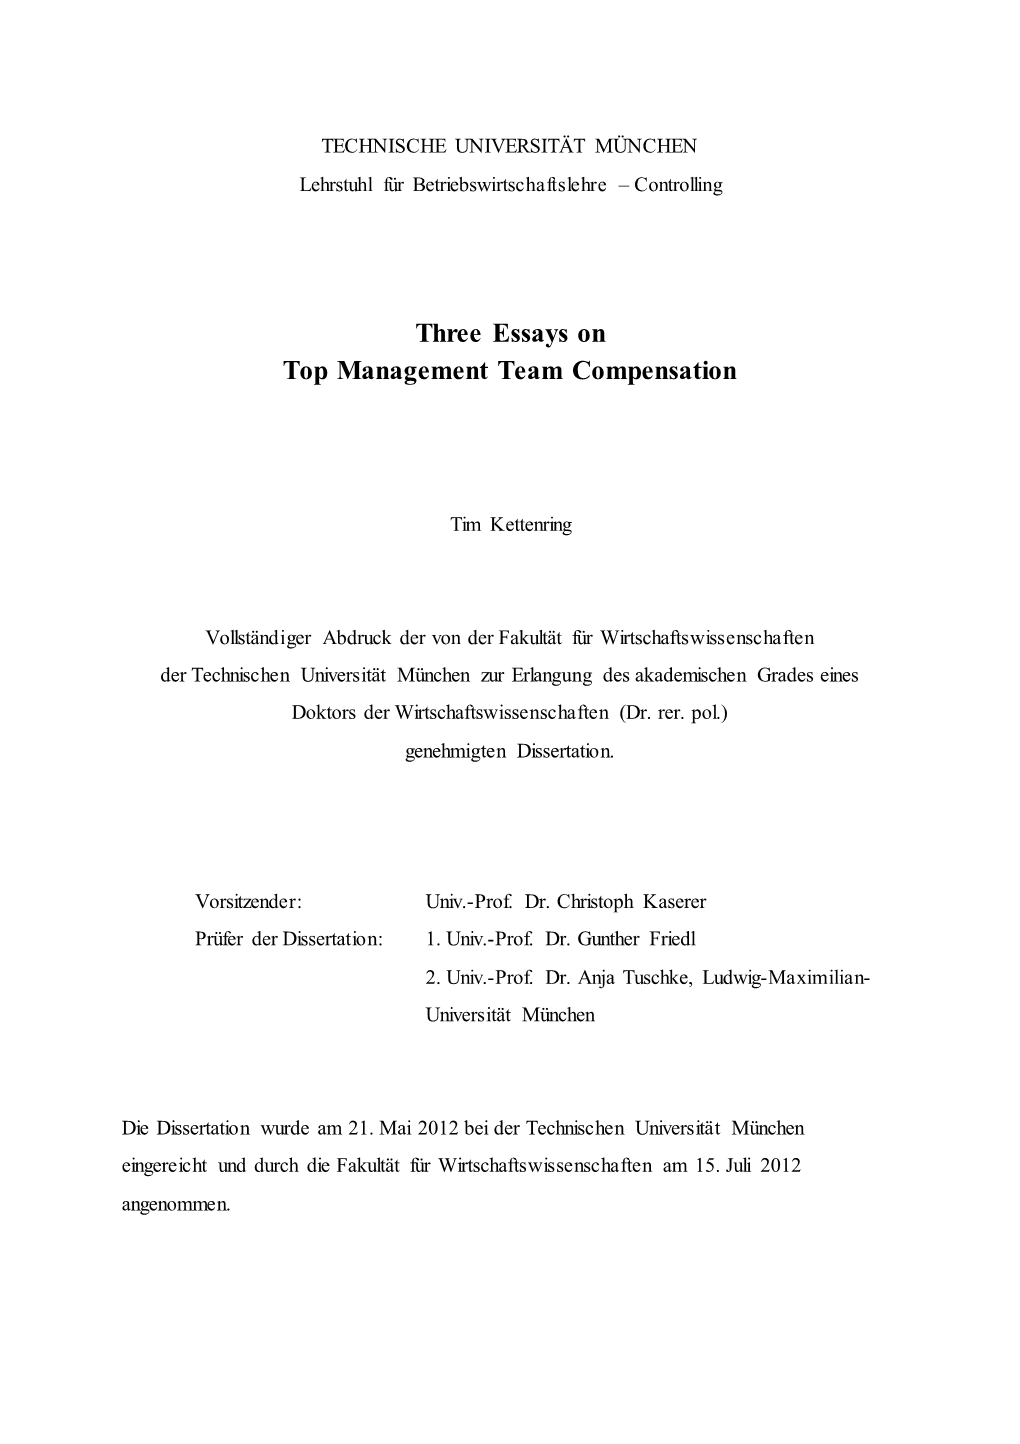 Three Essays on Top Management Team Compensation